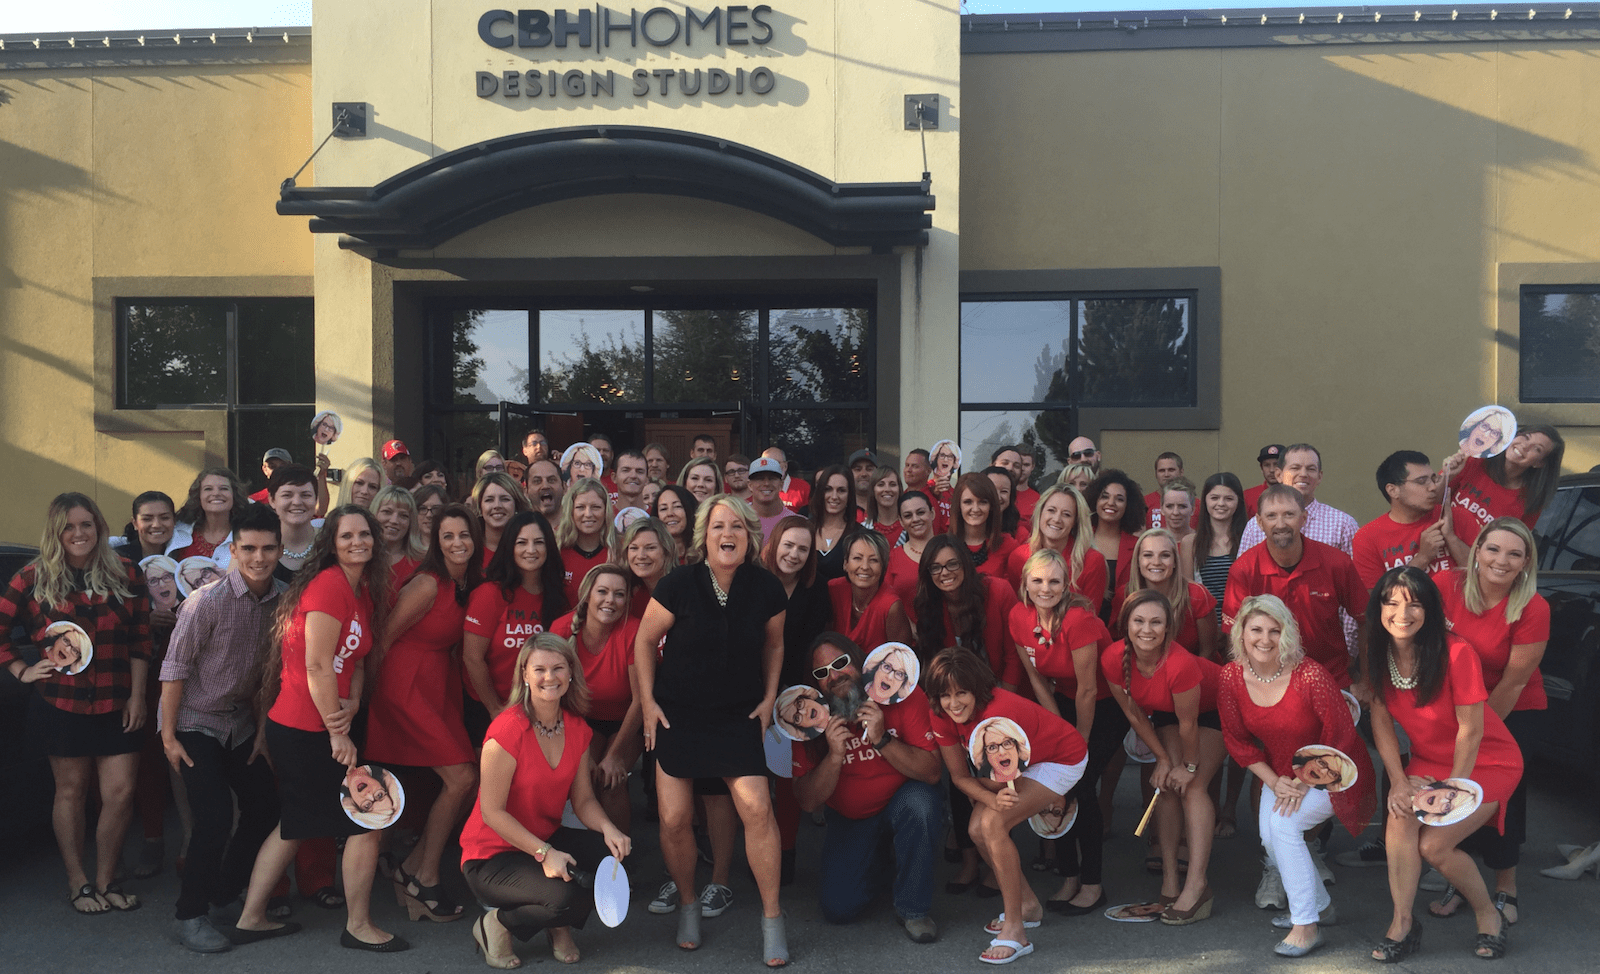 CBH Homes' women employees 